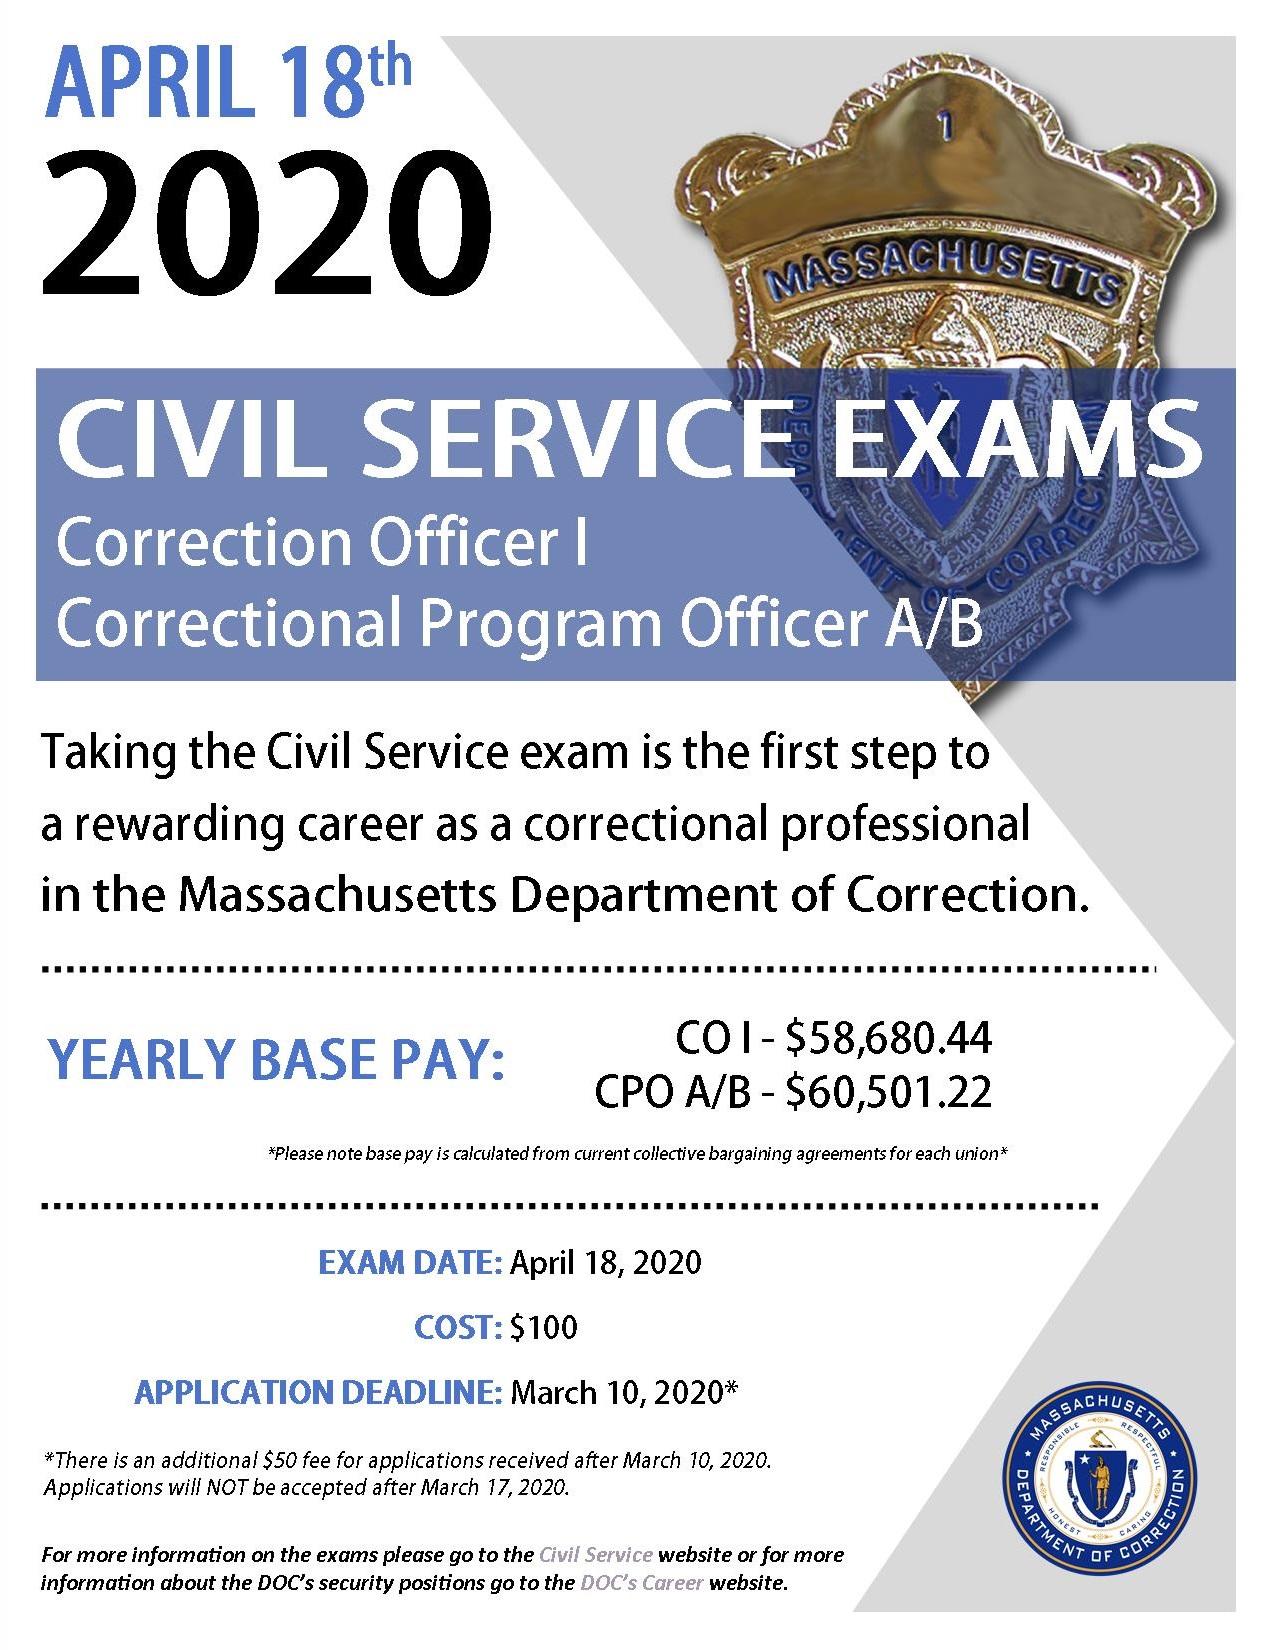 April 18, 2020 Civil Service Exams Flyer